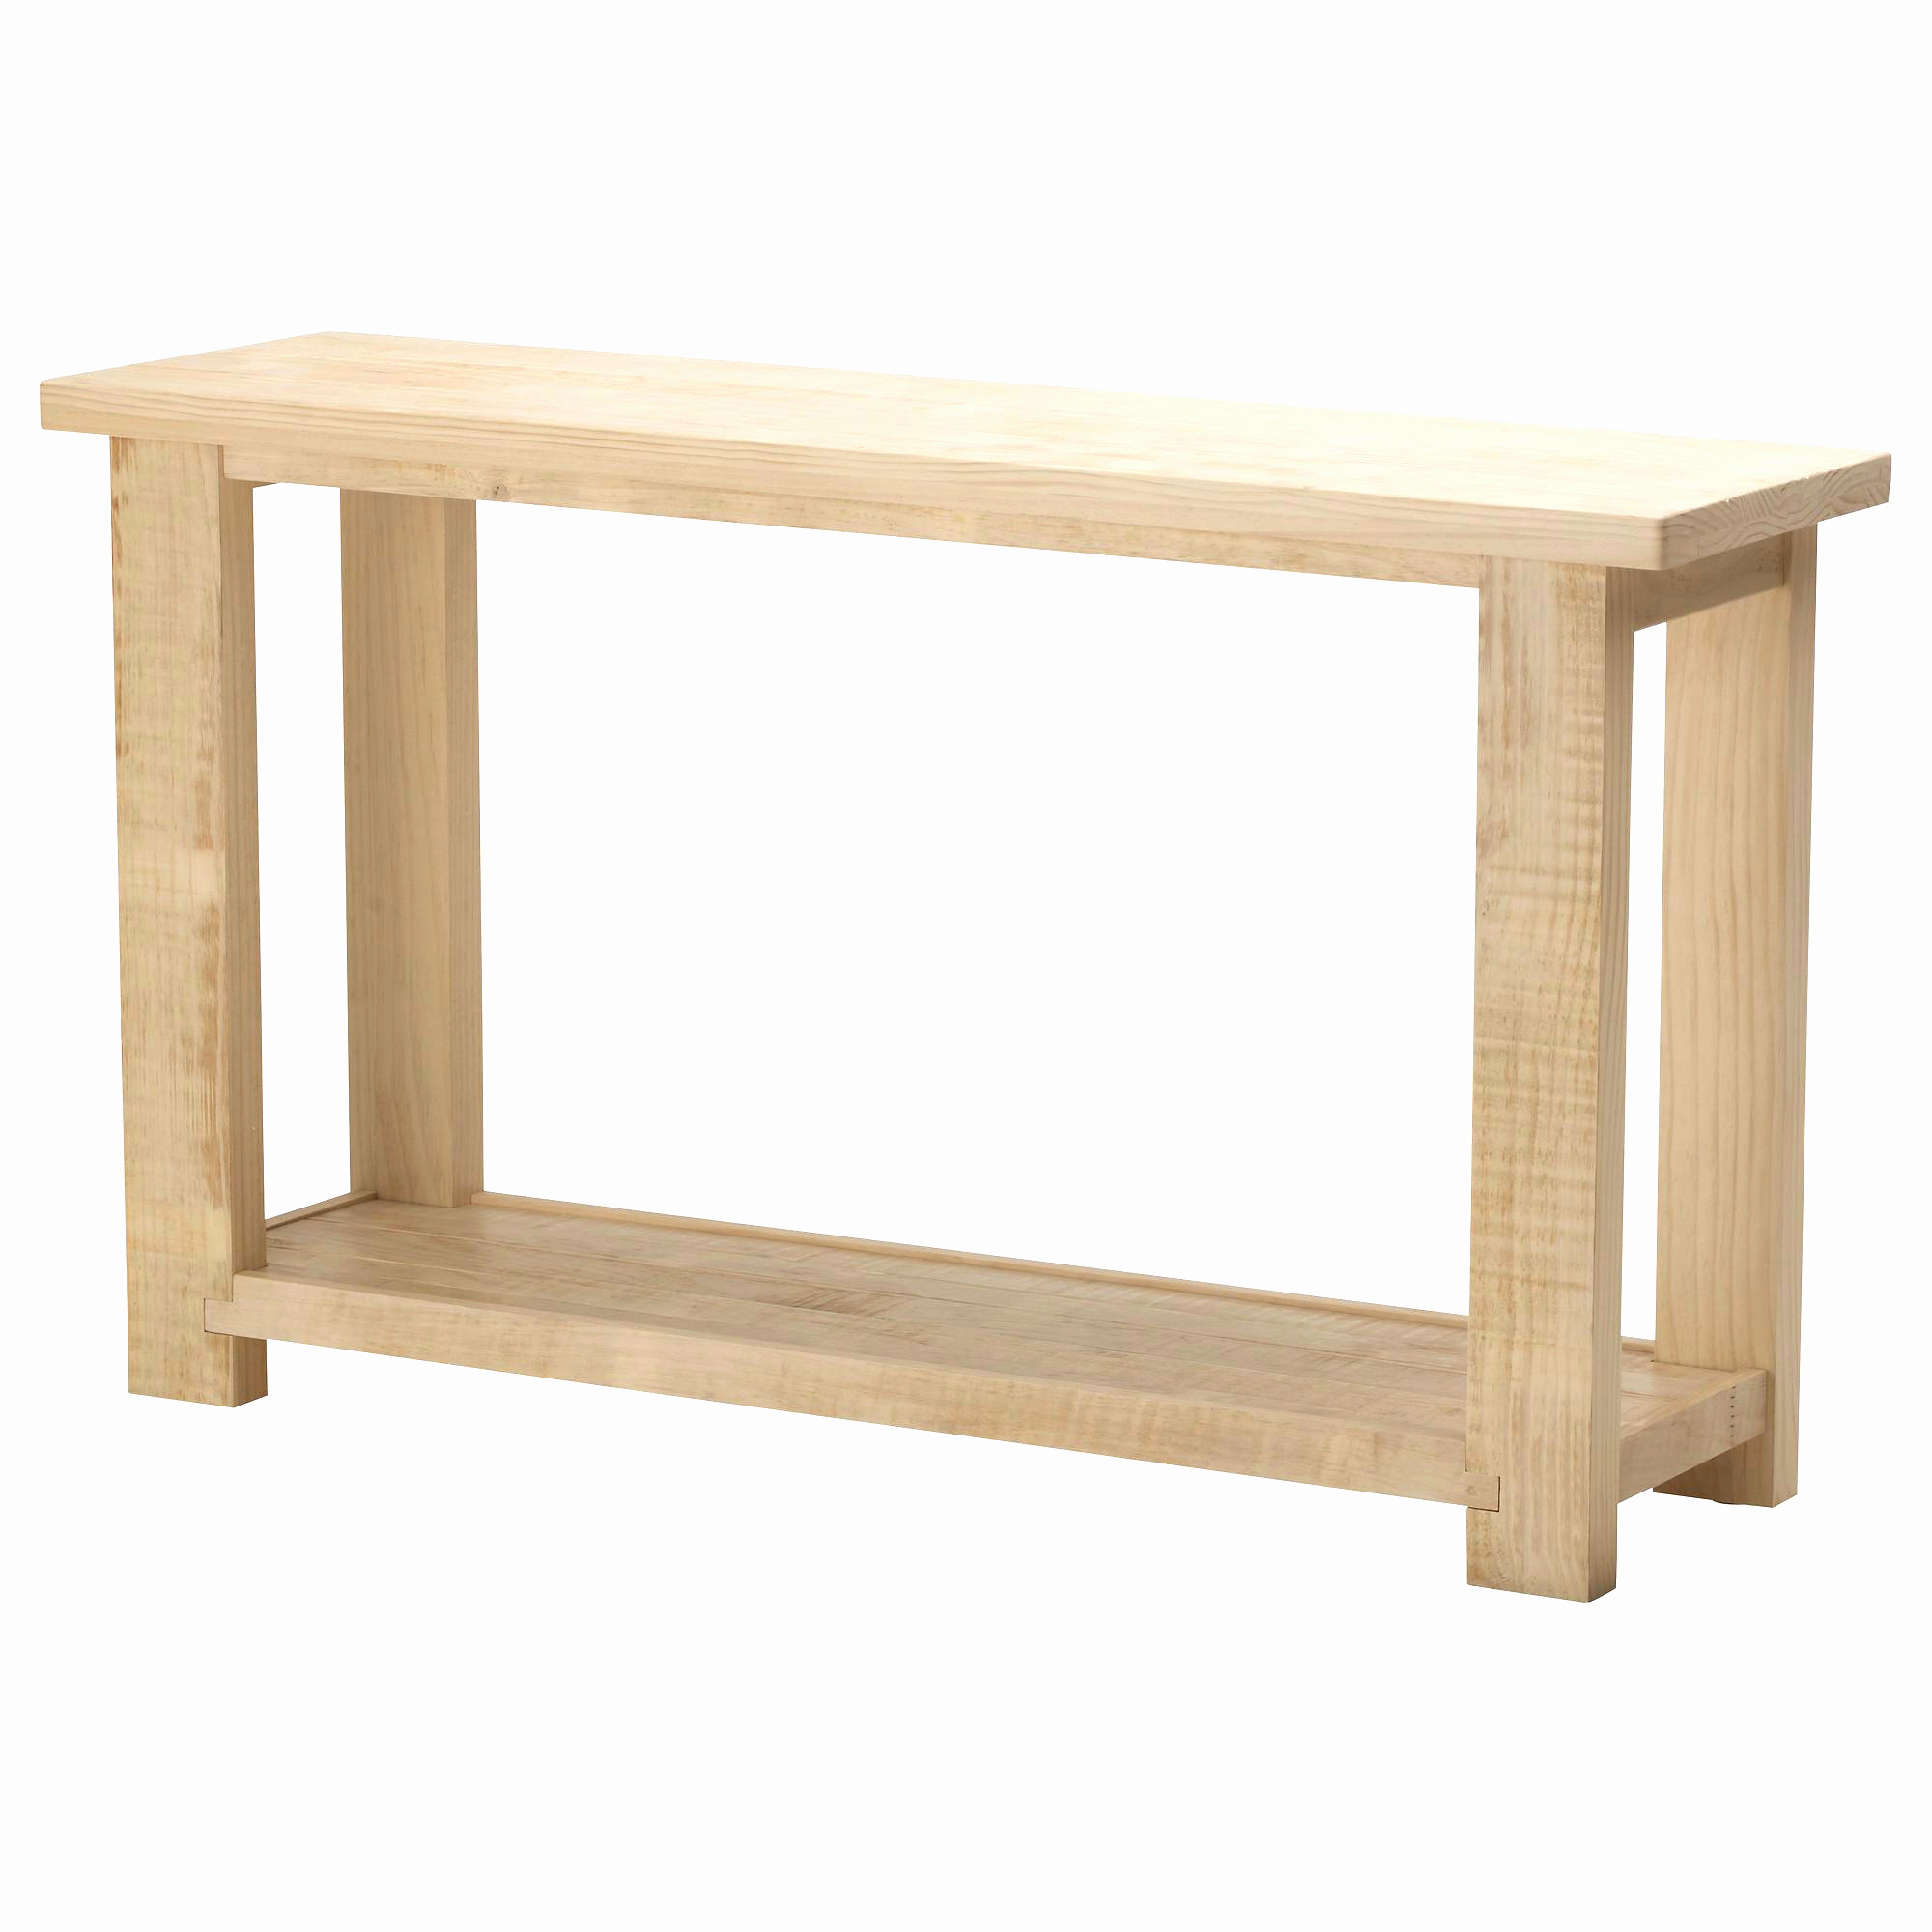 Table De Jardin Ikea Inspirant Table Basse Relevable Extensible Ikea Nouveau Tables De